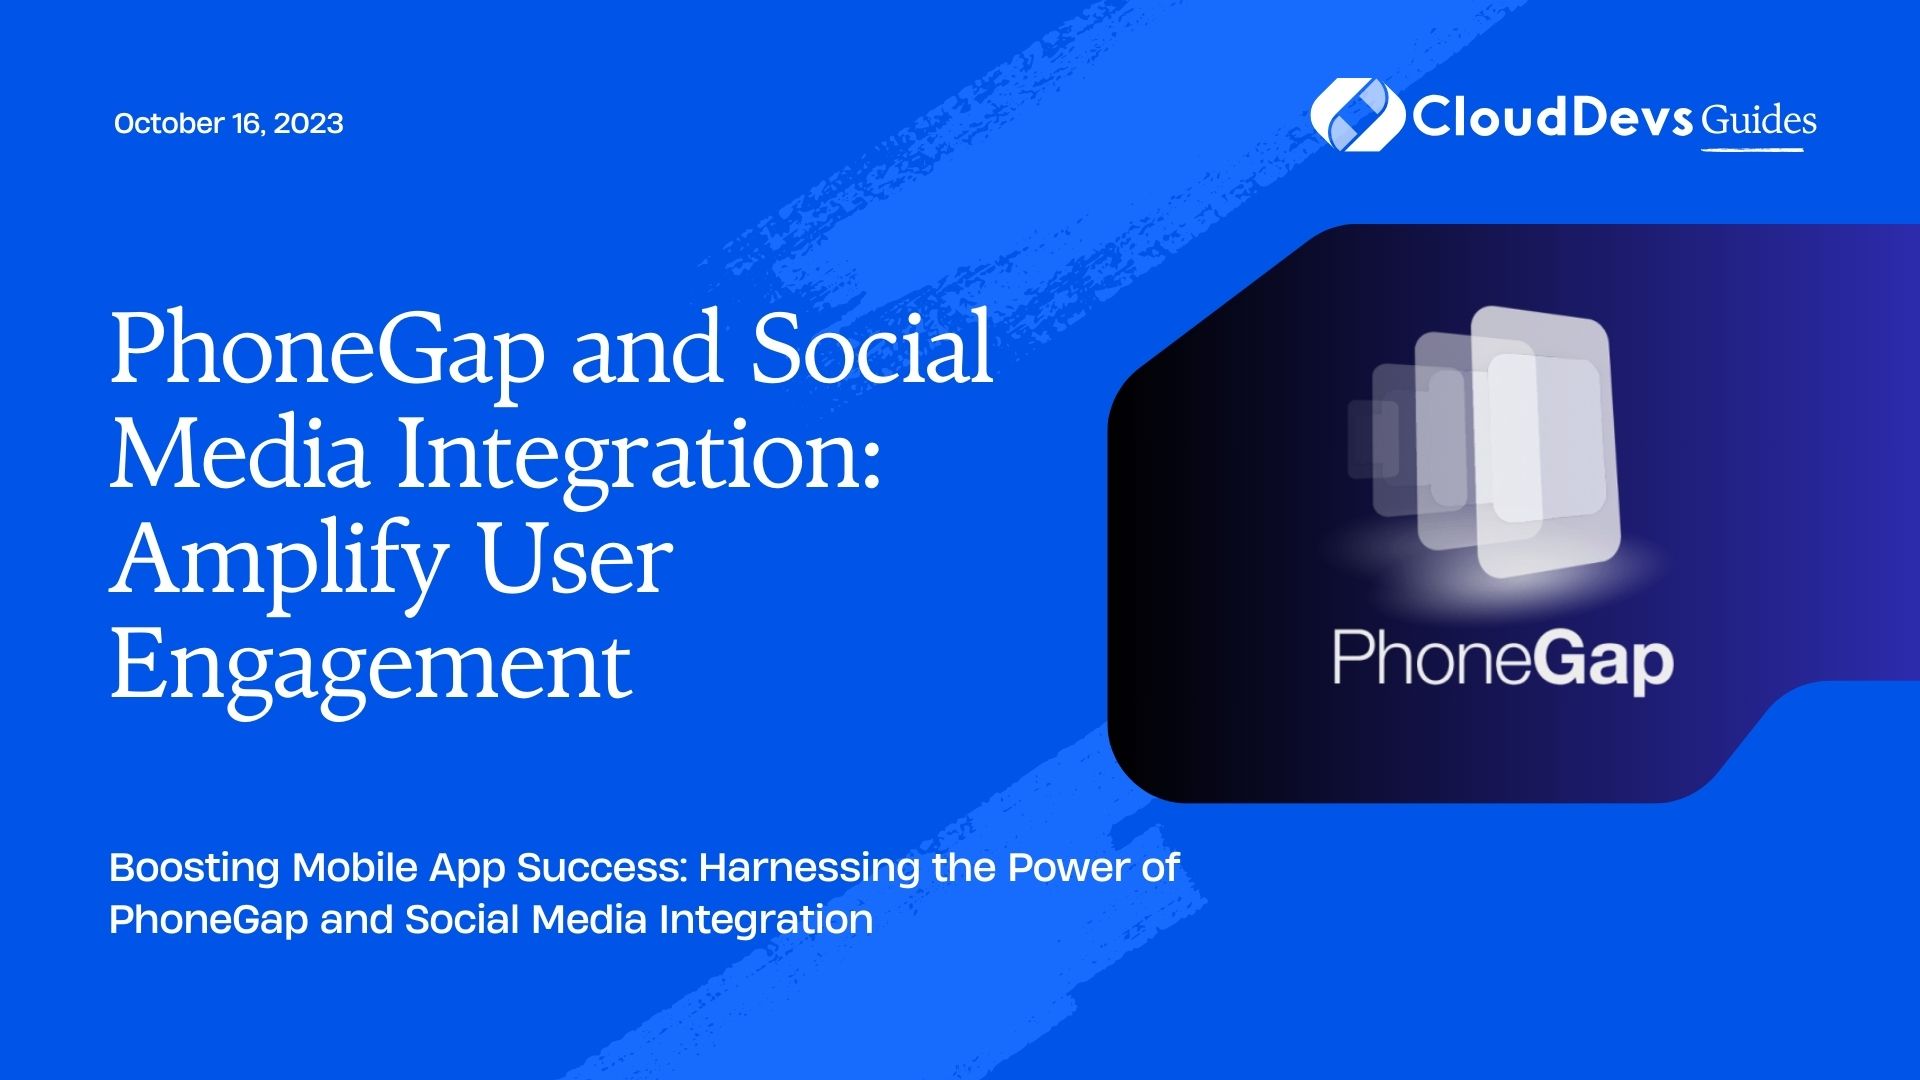 PhoneGap and Social Media Integration: Amplify User Engagement